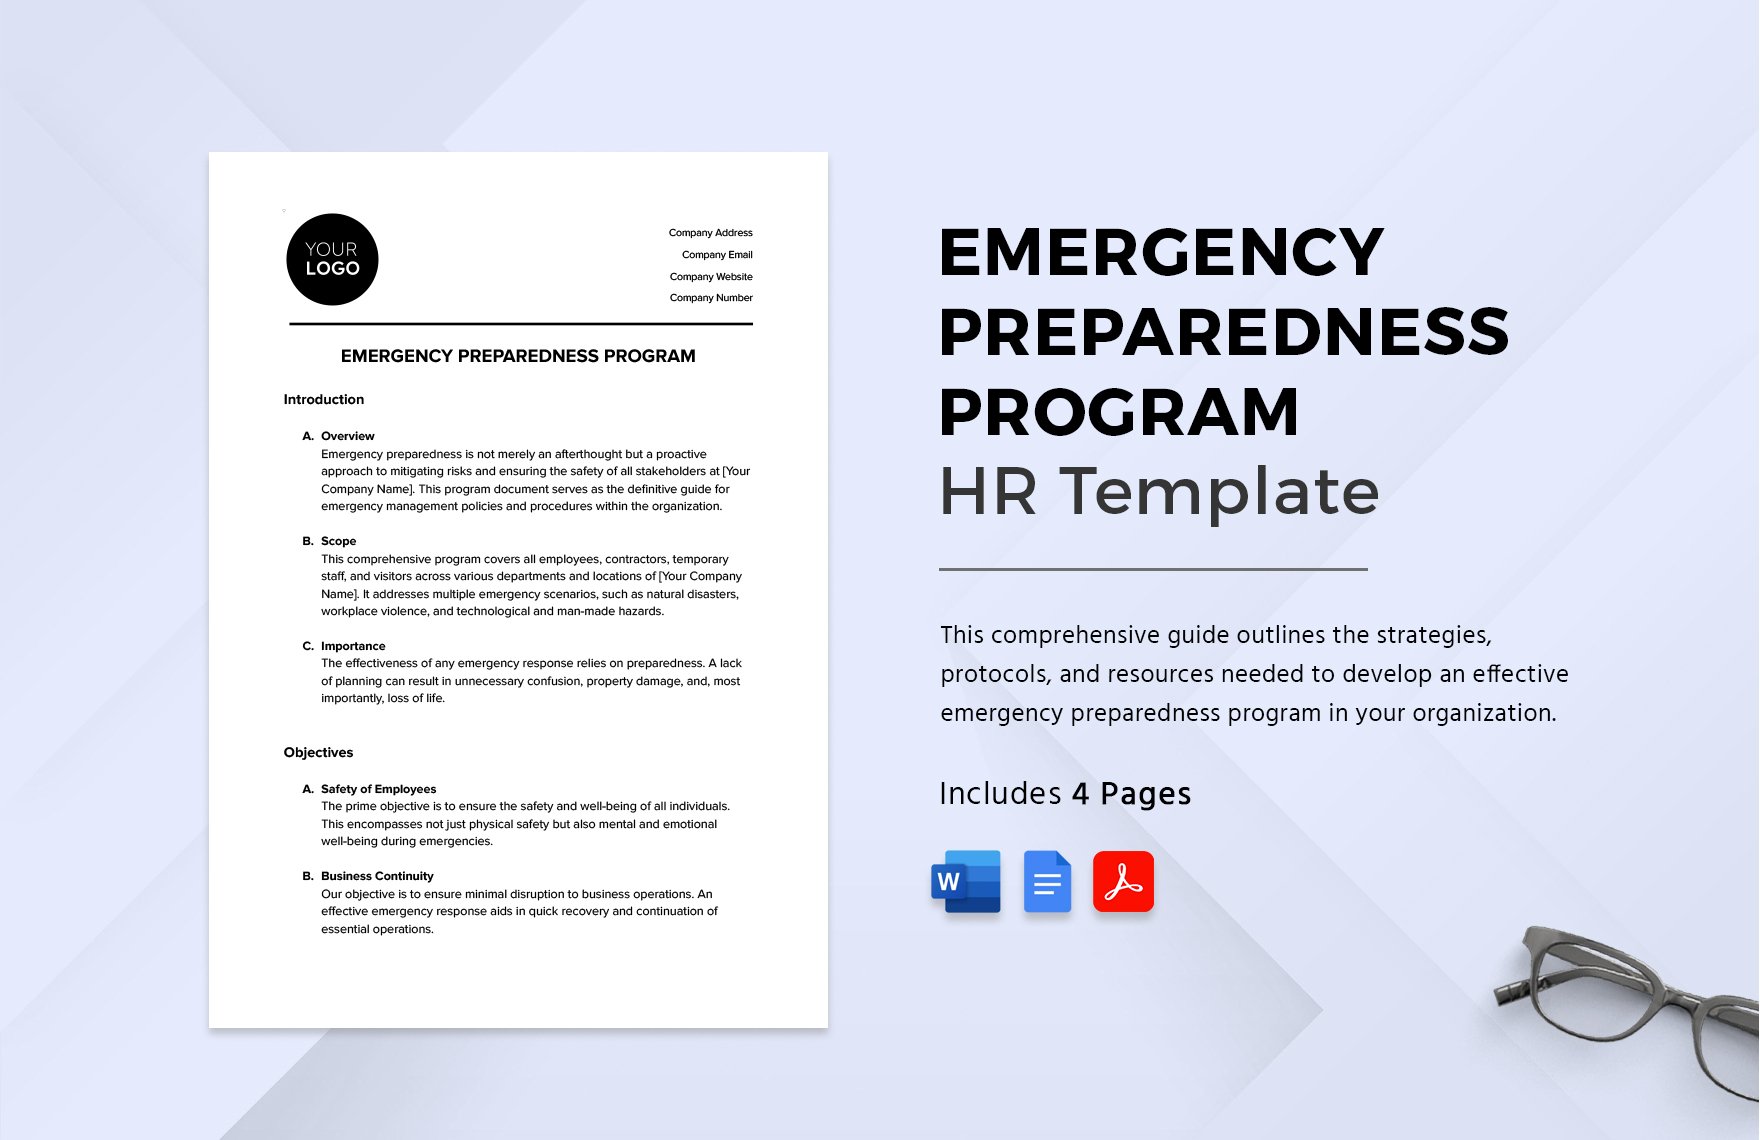 Emergency Preparedness Program HR Template